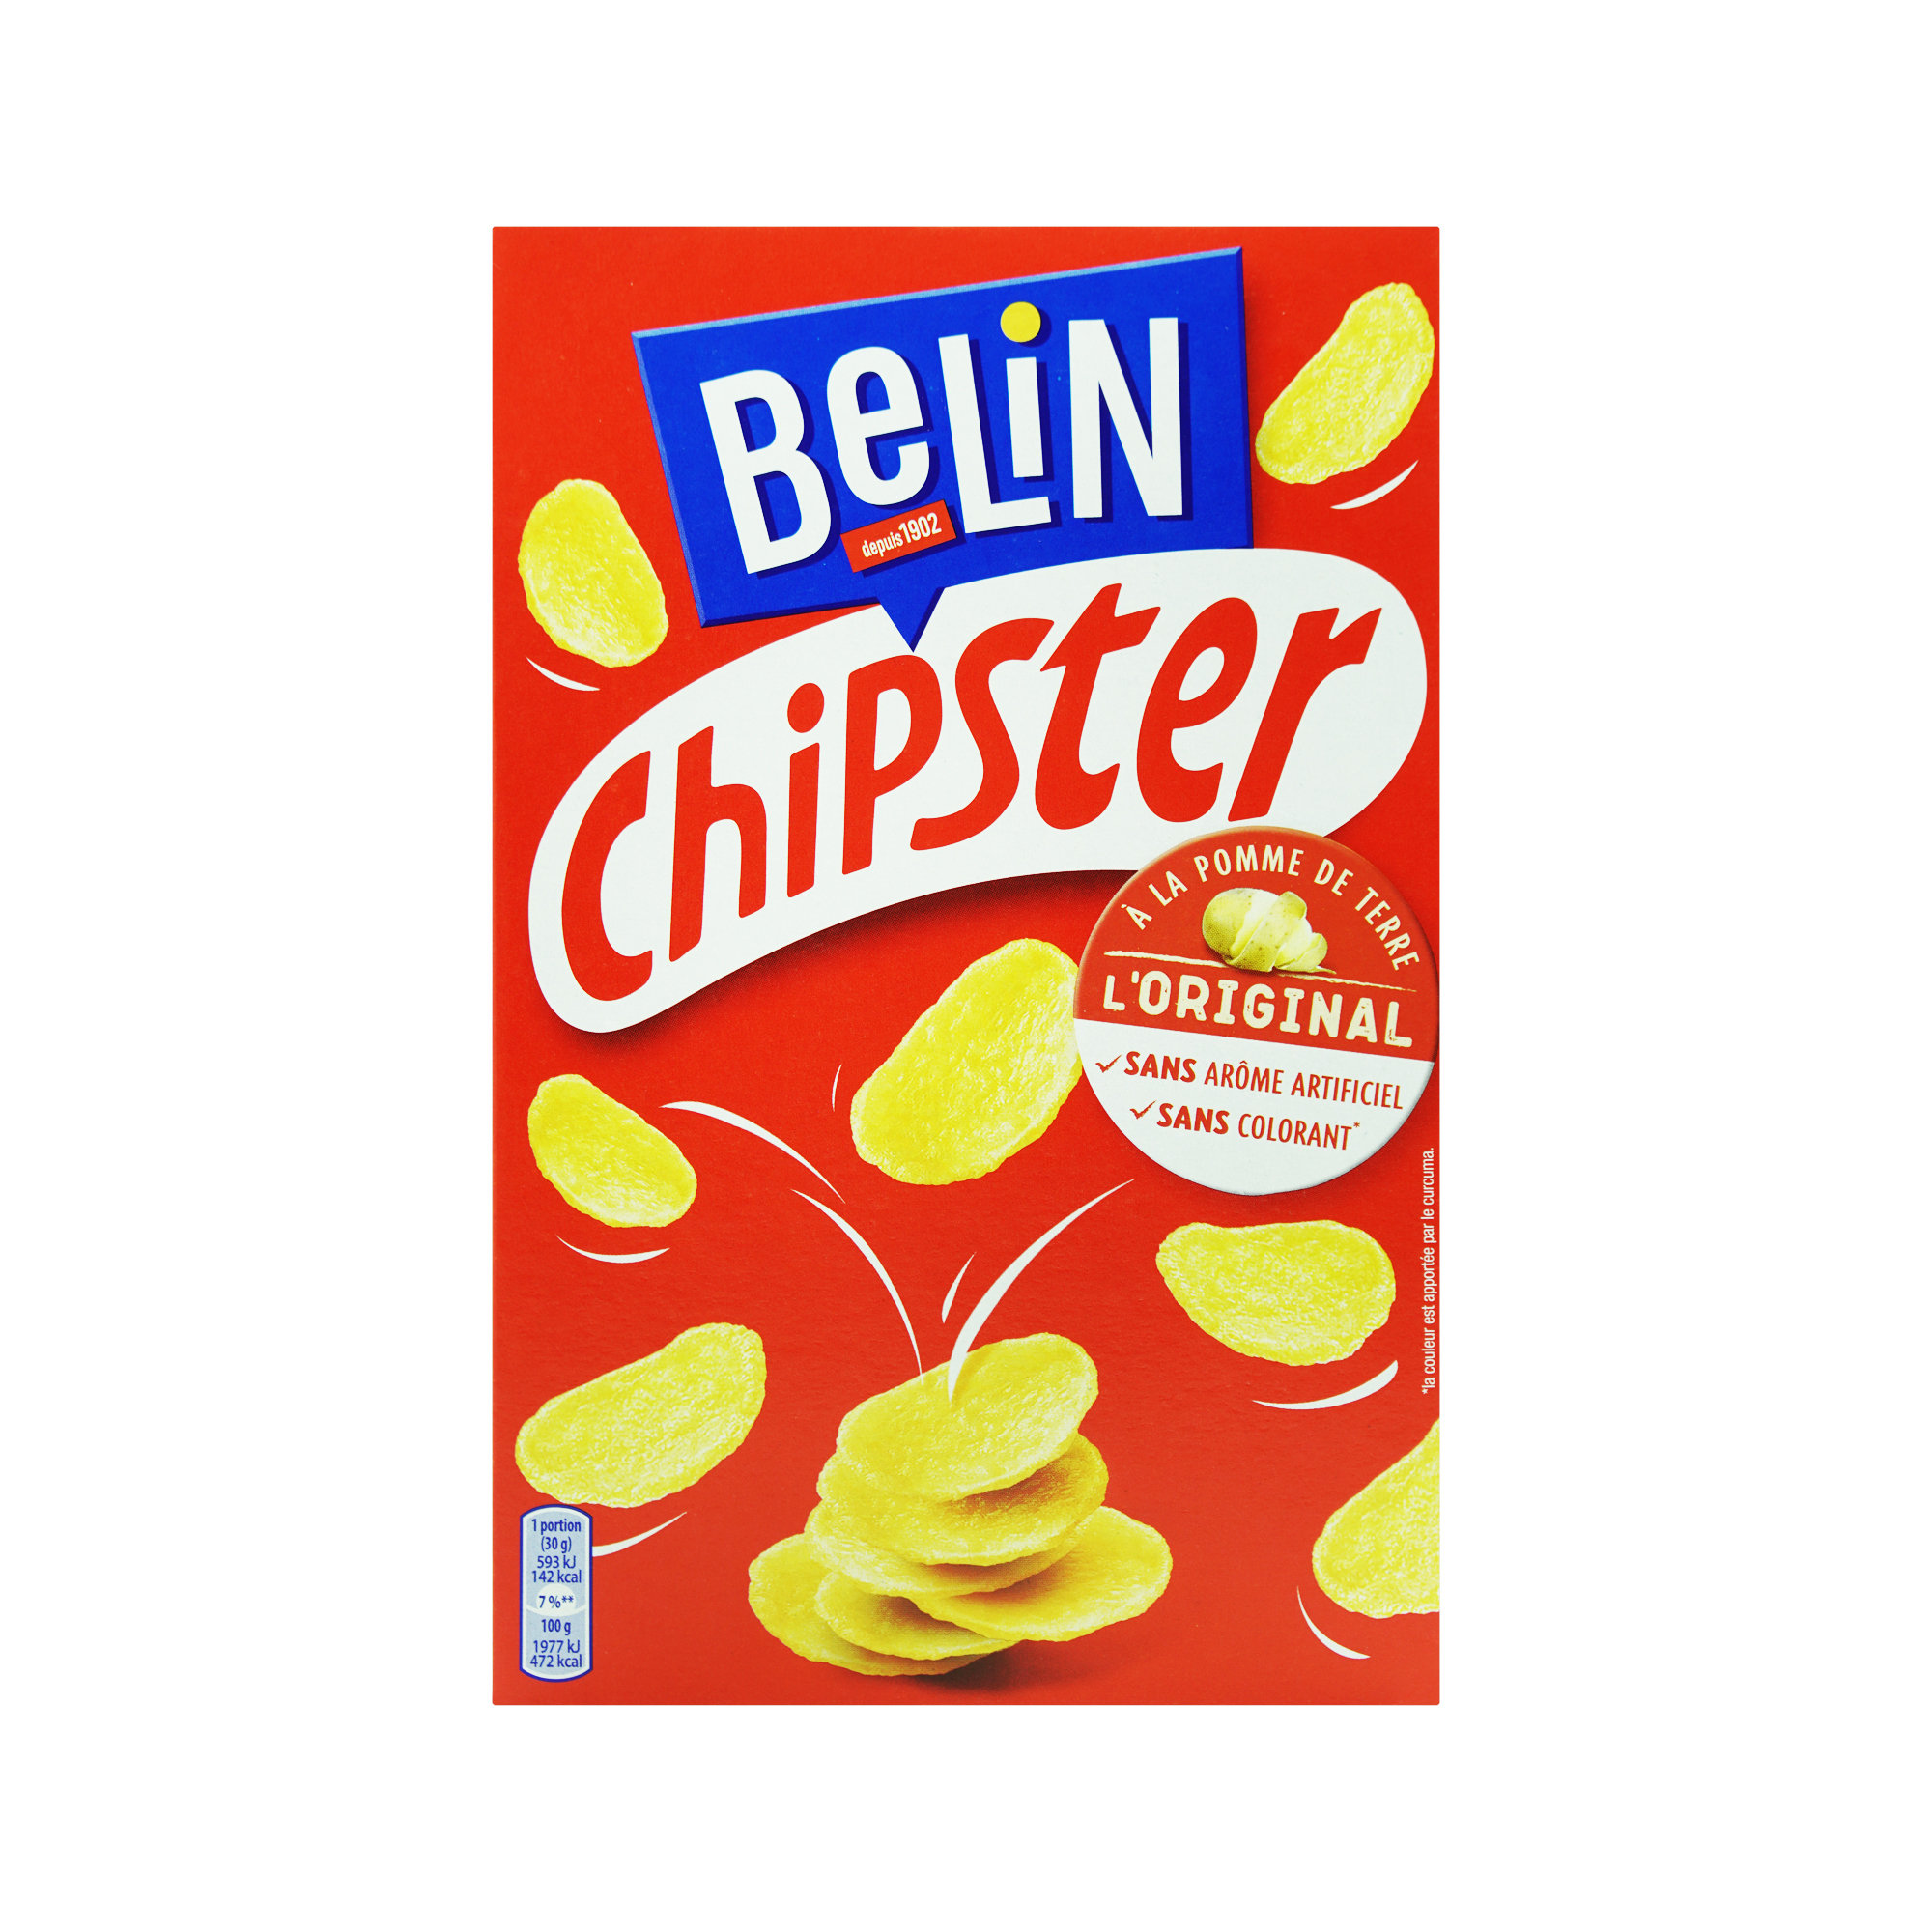 Belin Chipster Original (75g)